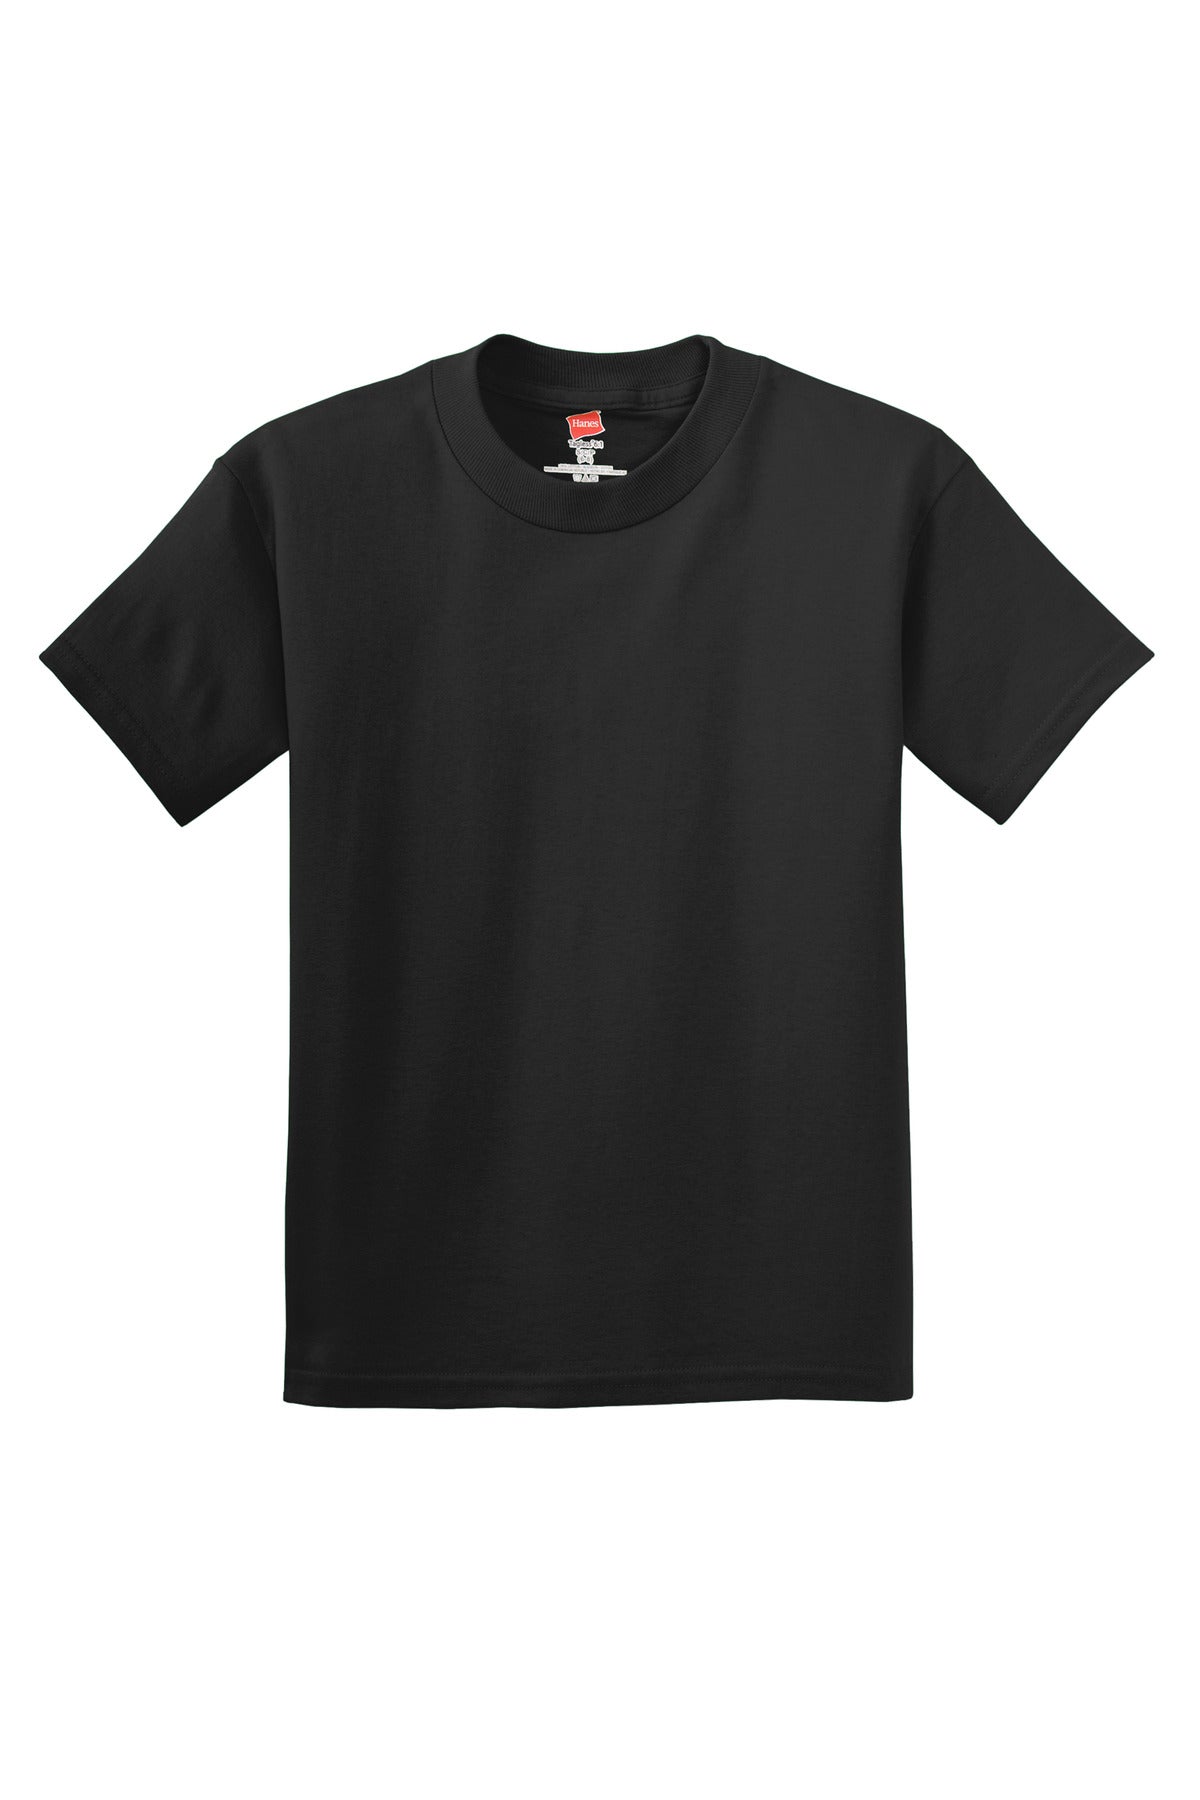 Hanes® - Youth Authentic 100% Cotton T-Shirt. 5450 - DFW Impression